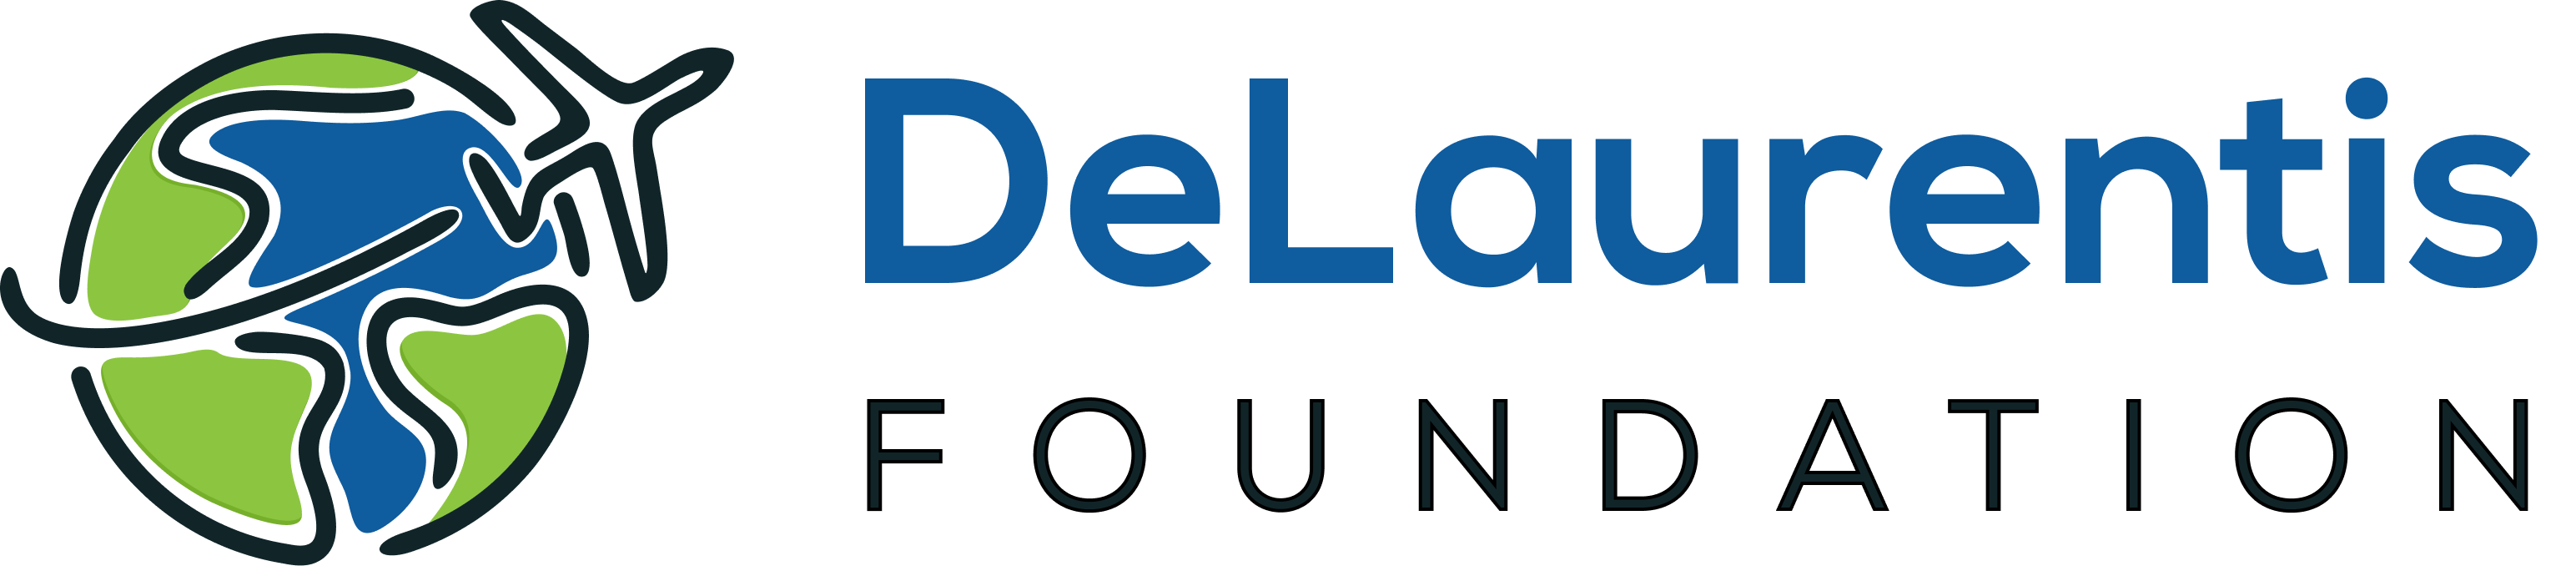 Delaurentis Foundation